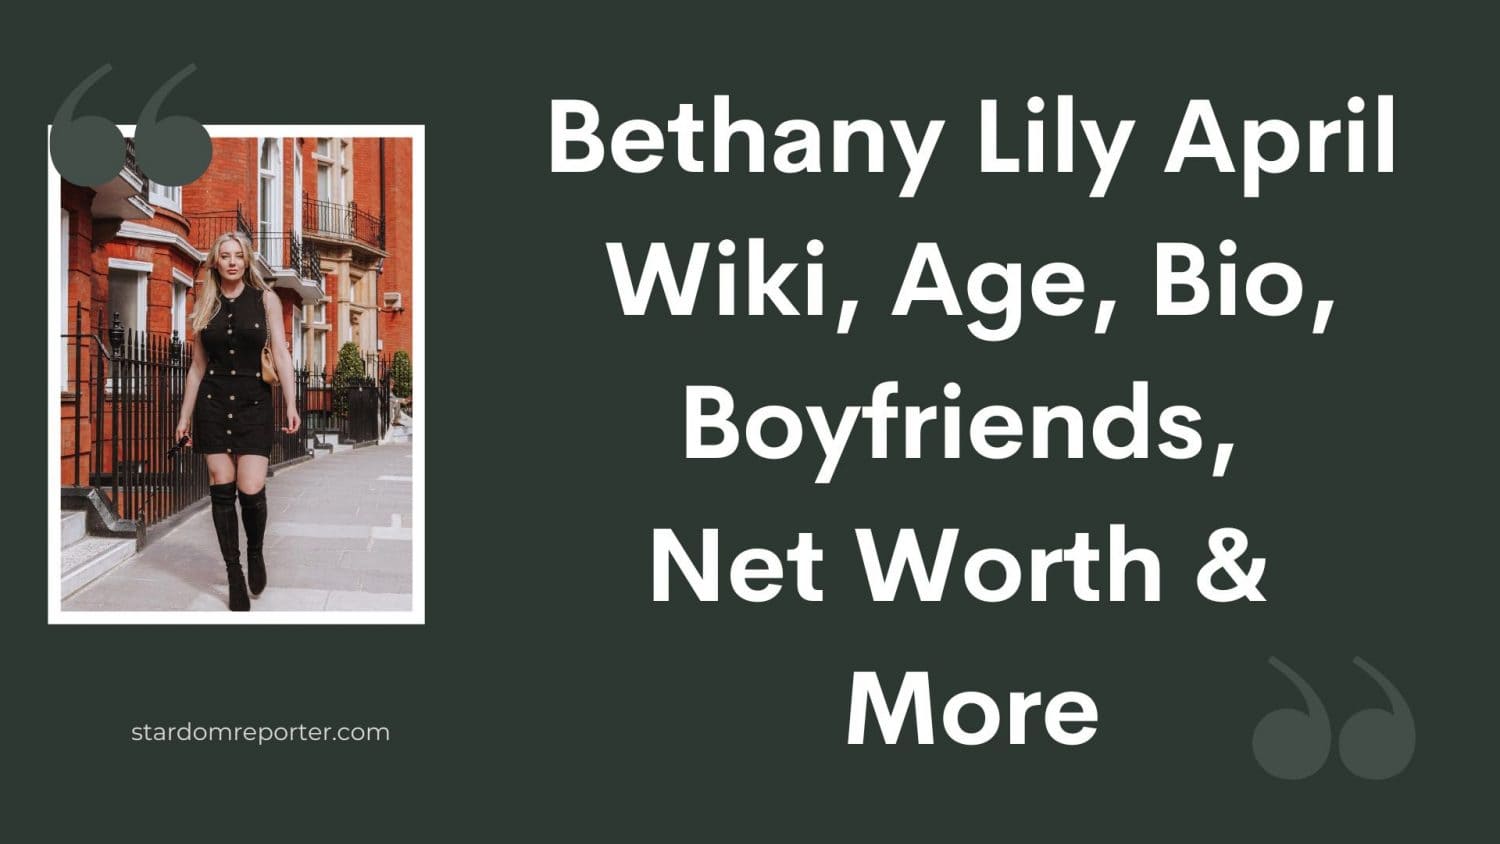 Bethany Lily April Wiki, Age, Bio, Boyfriends, Net Worth & More - 17